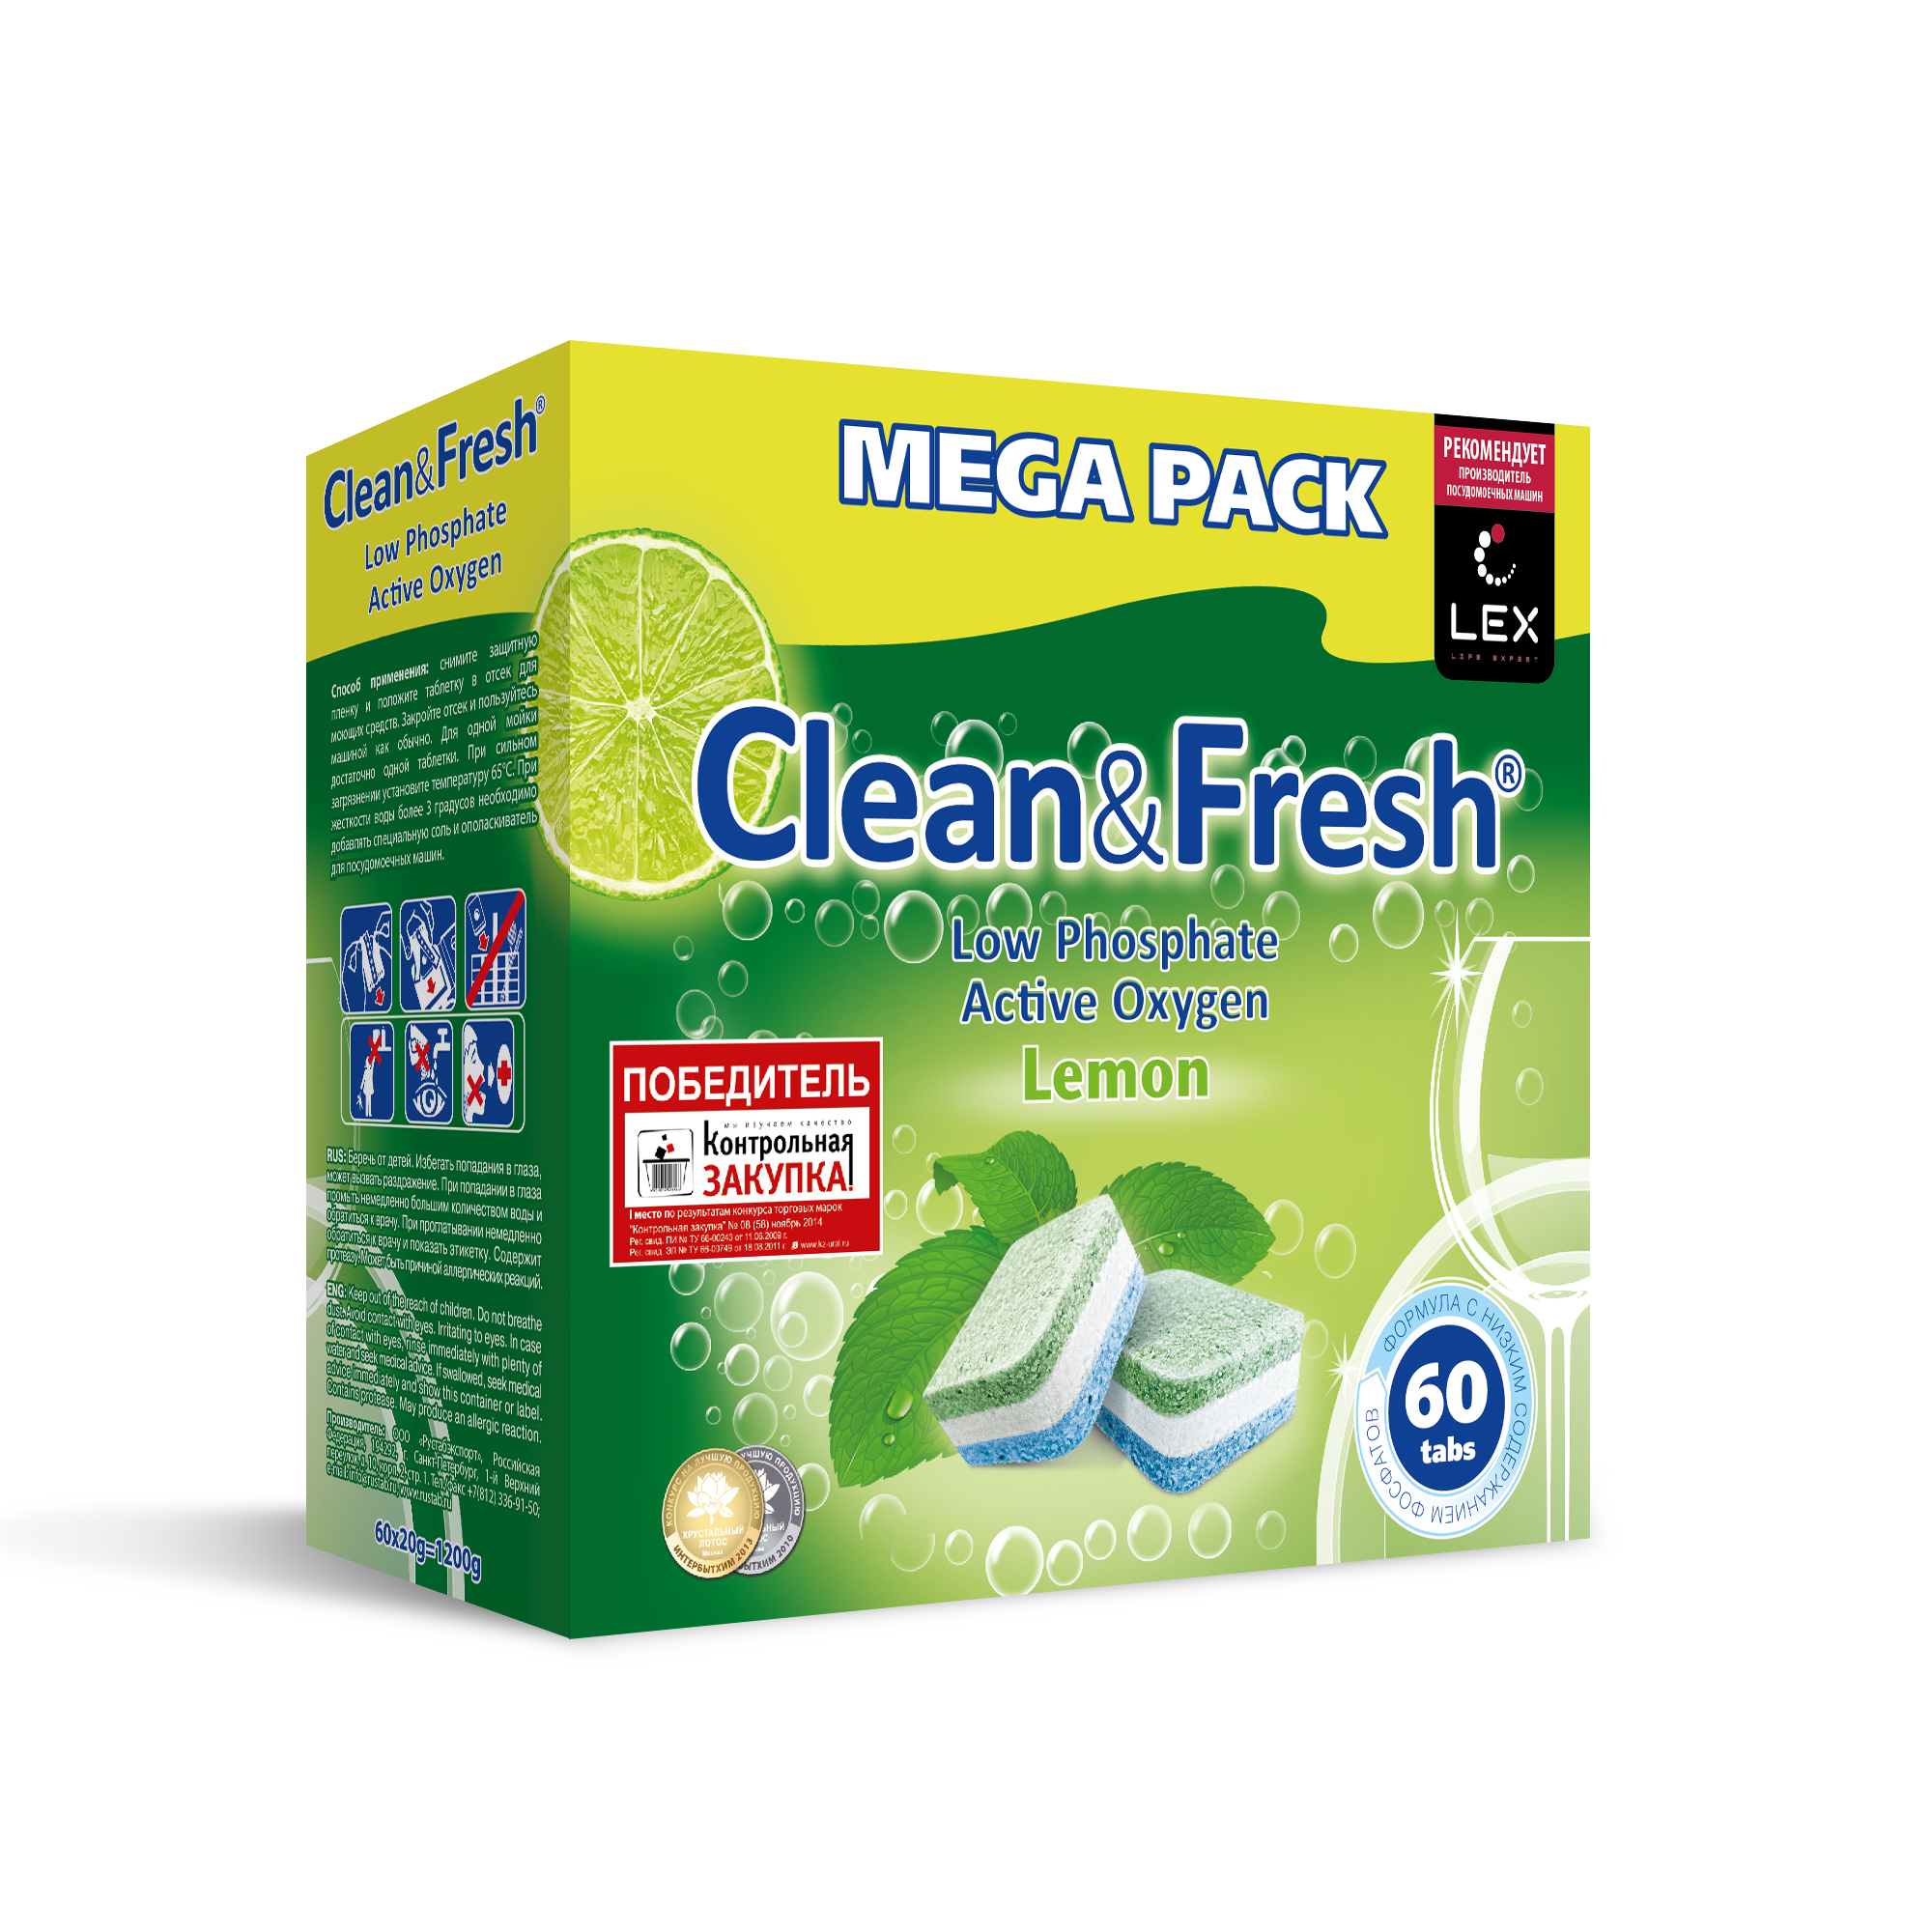 Clean fresh all in 1. Таблетки для ПММ "clean&Fresh" allin1. Таблетки для посудомоечных машин clean & Fresh all in 1, 60 шт. Clean & Fresh all in 1 таблетки для посудомоечной машины. Таблетки для ПММ "clean&Fresh" allin1 (Mega) 60 штук.